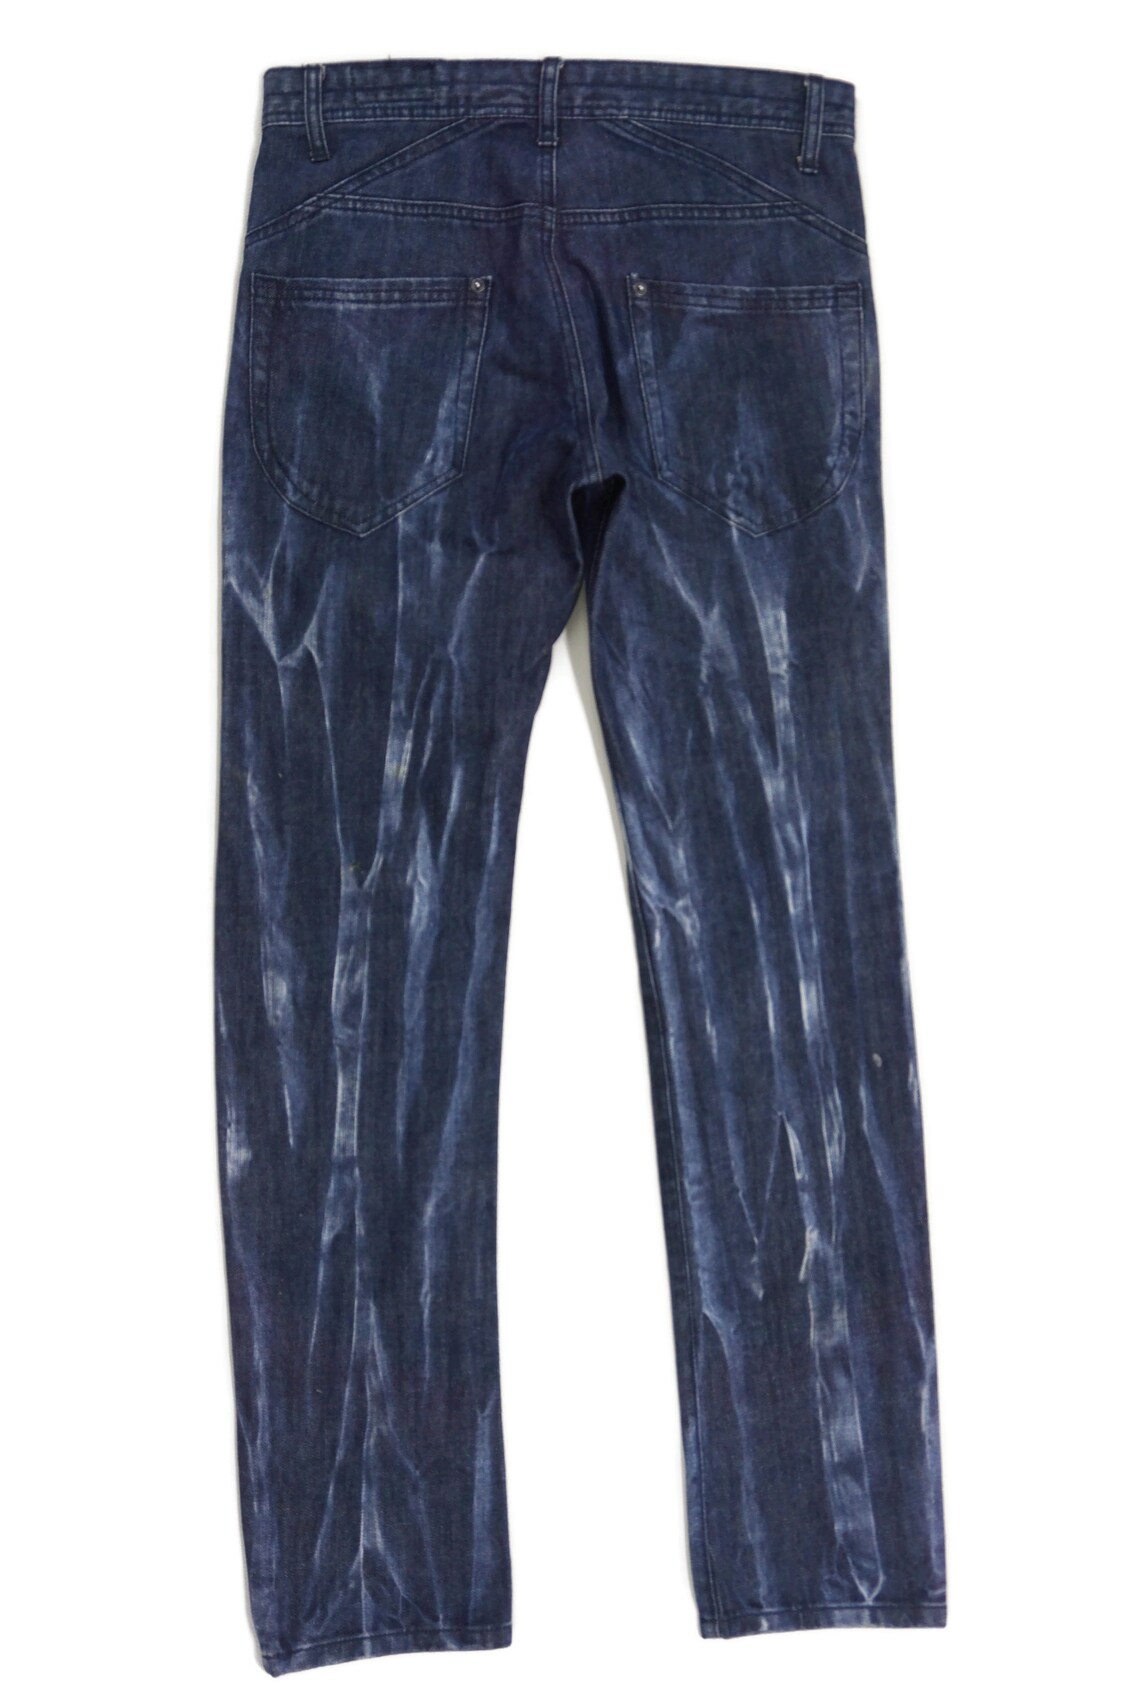 Semantic Design Jeans Size L W32.5xL33 Roen by Semantic Design | Etsy